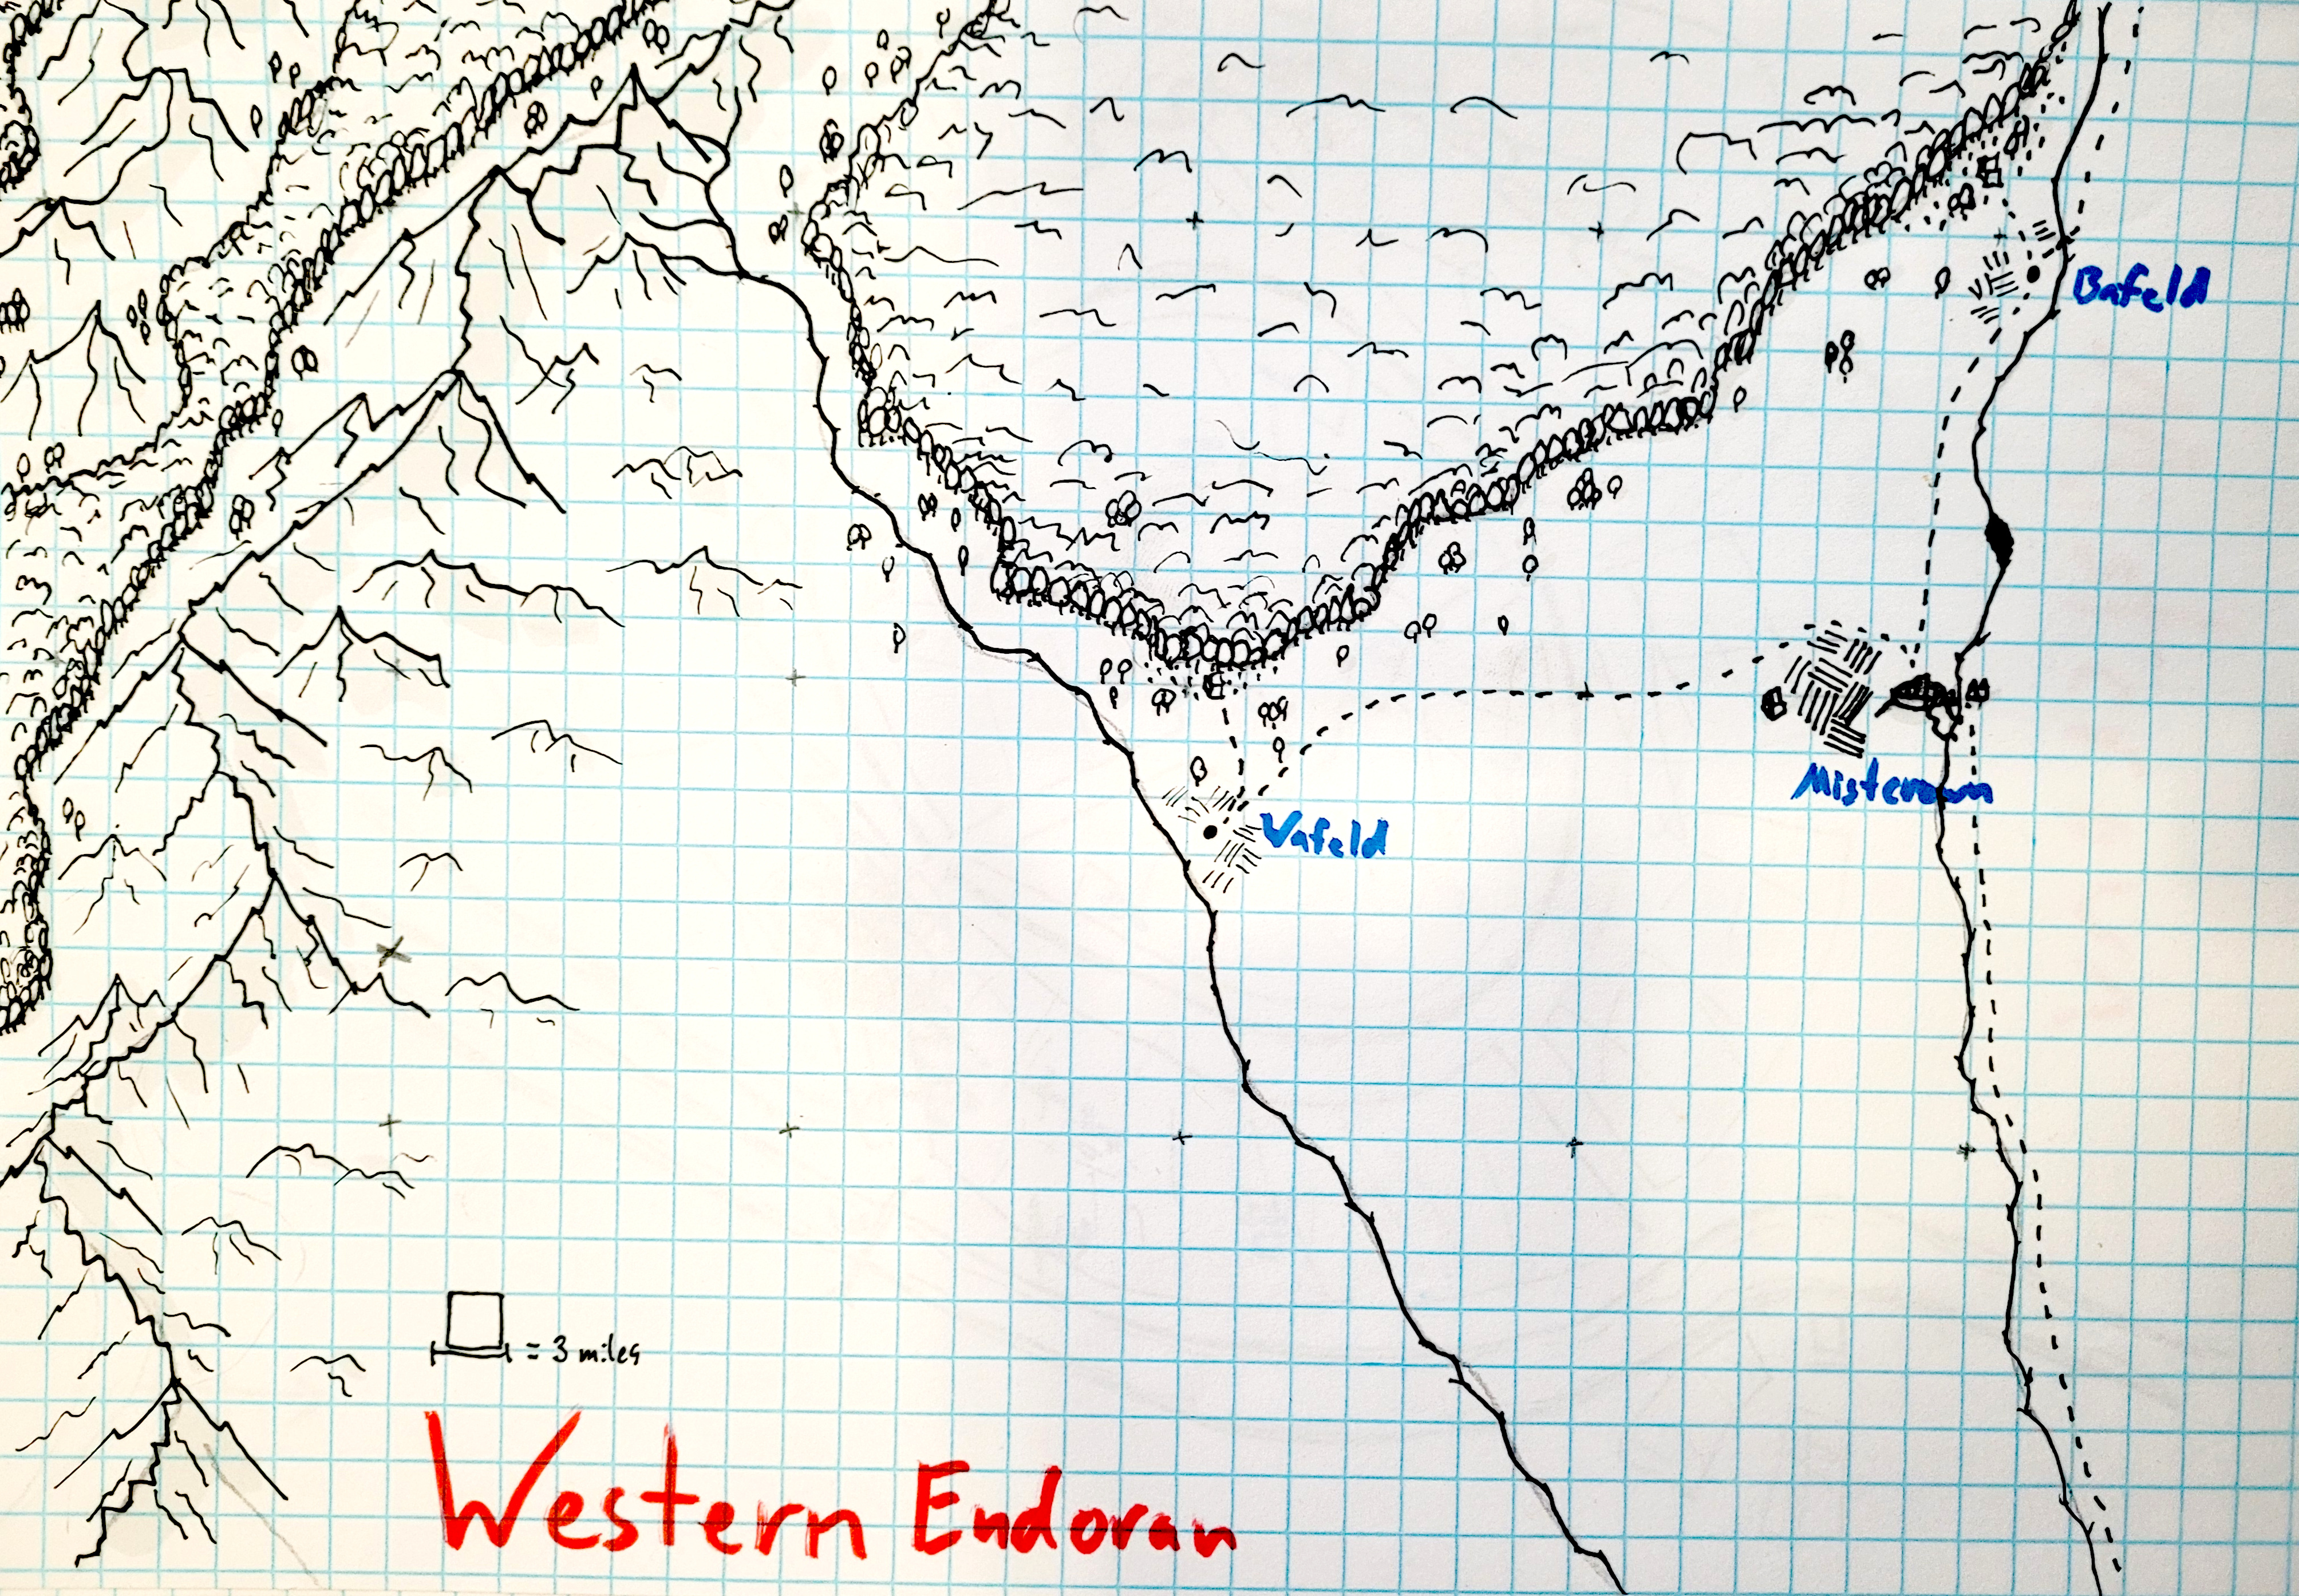 Western Endoran